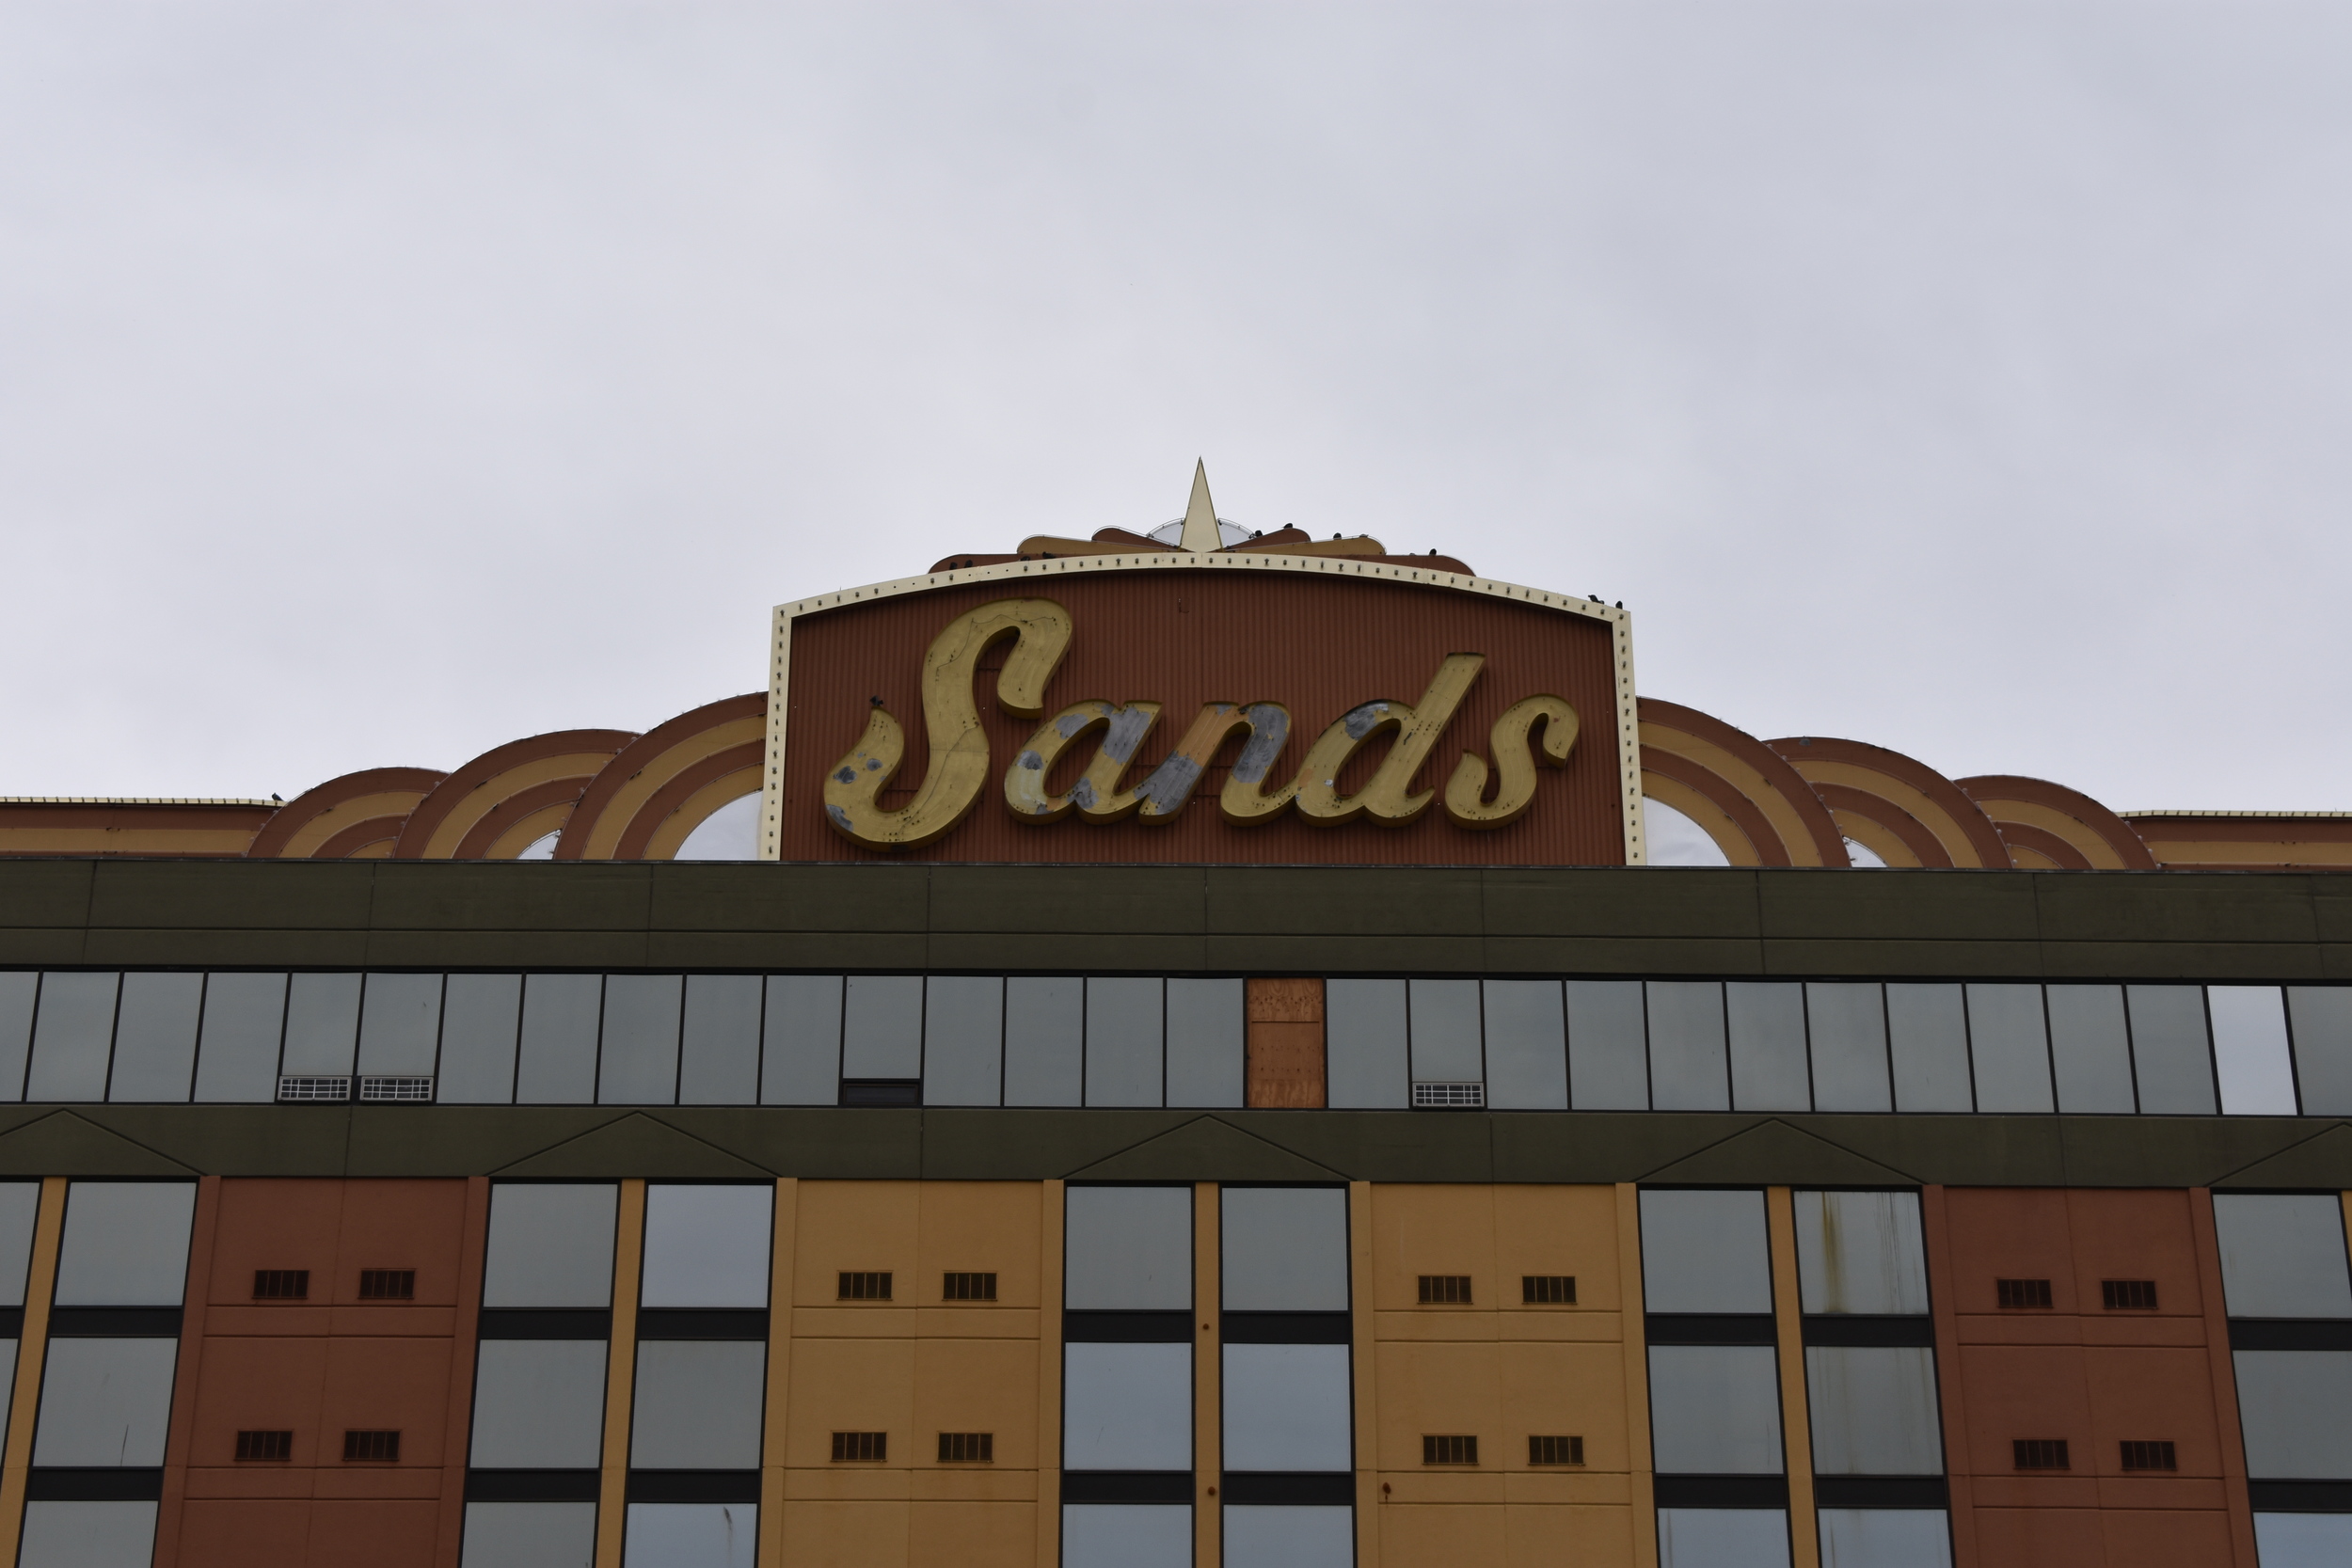 Sands Regency roof mounted sign, Reno, Nevada